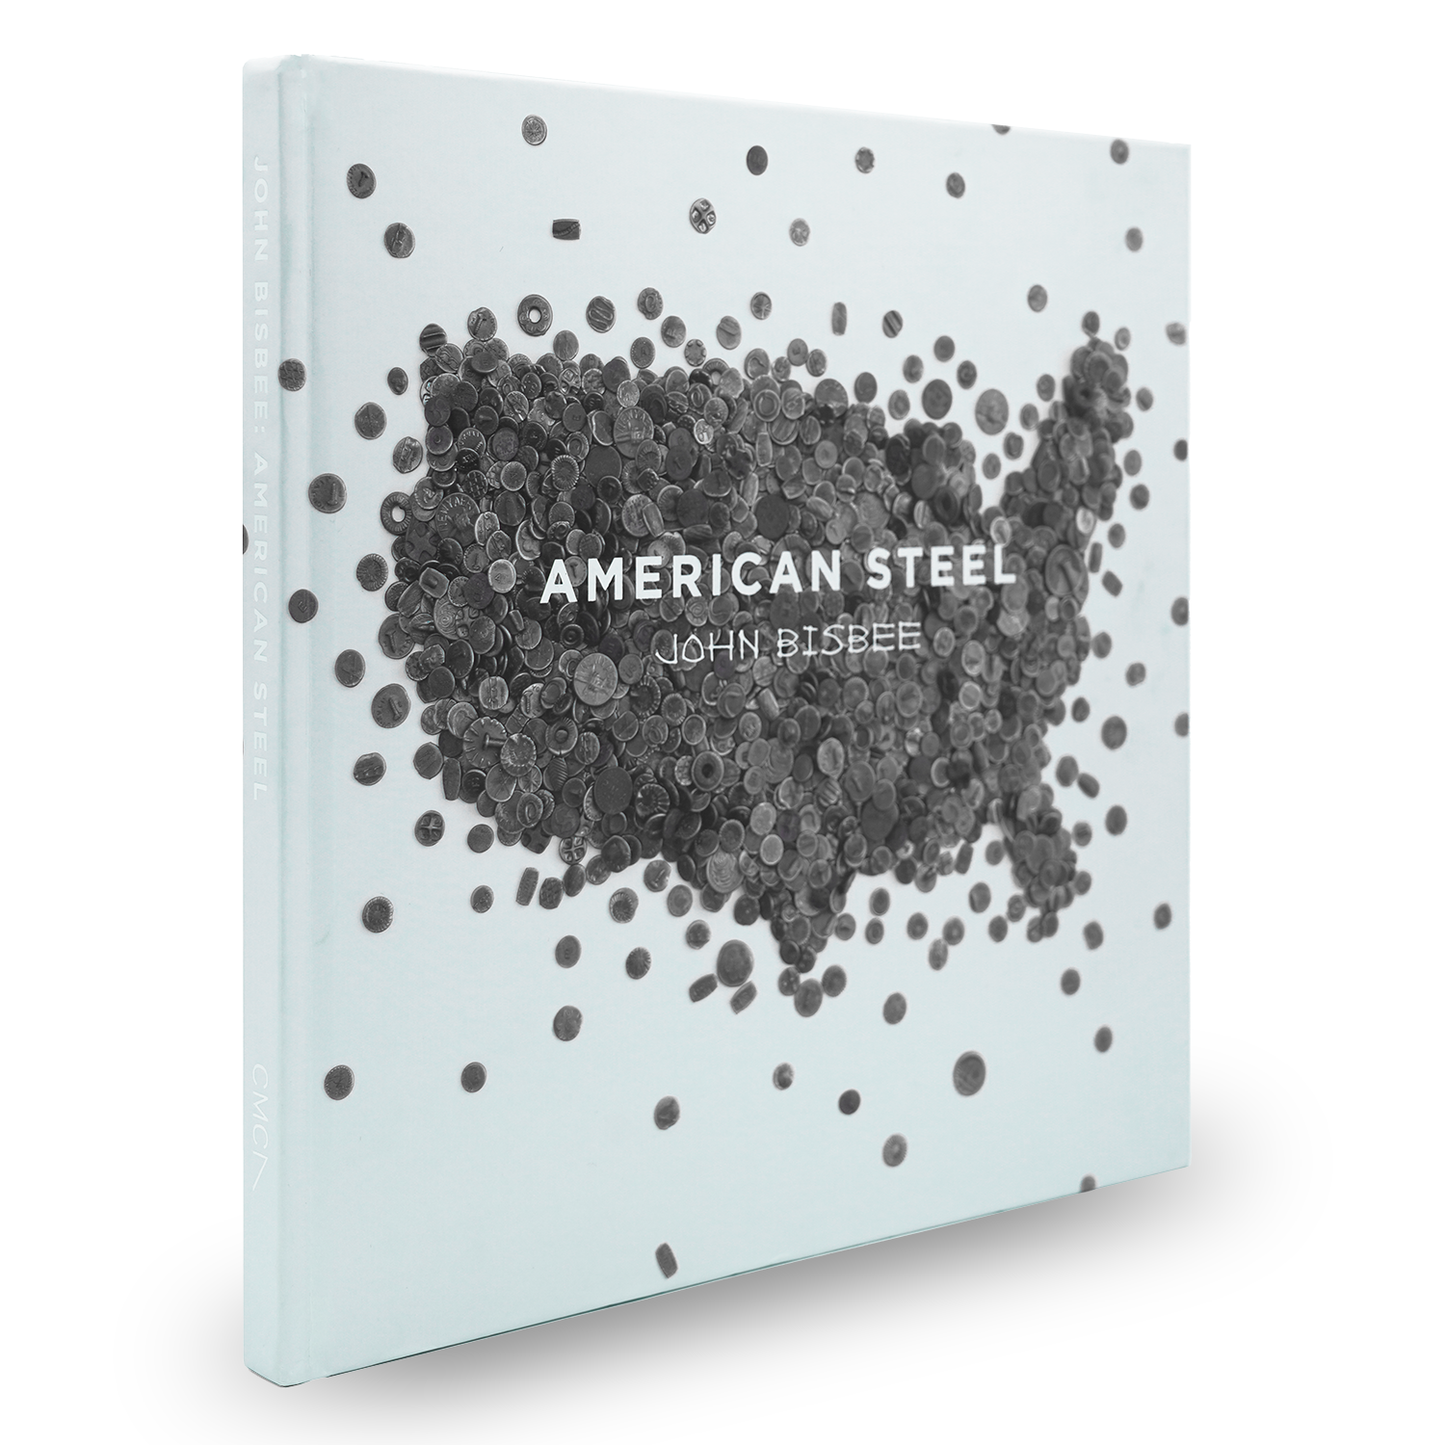 John Bisbee: American Steel